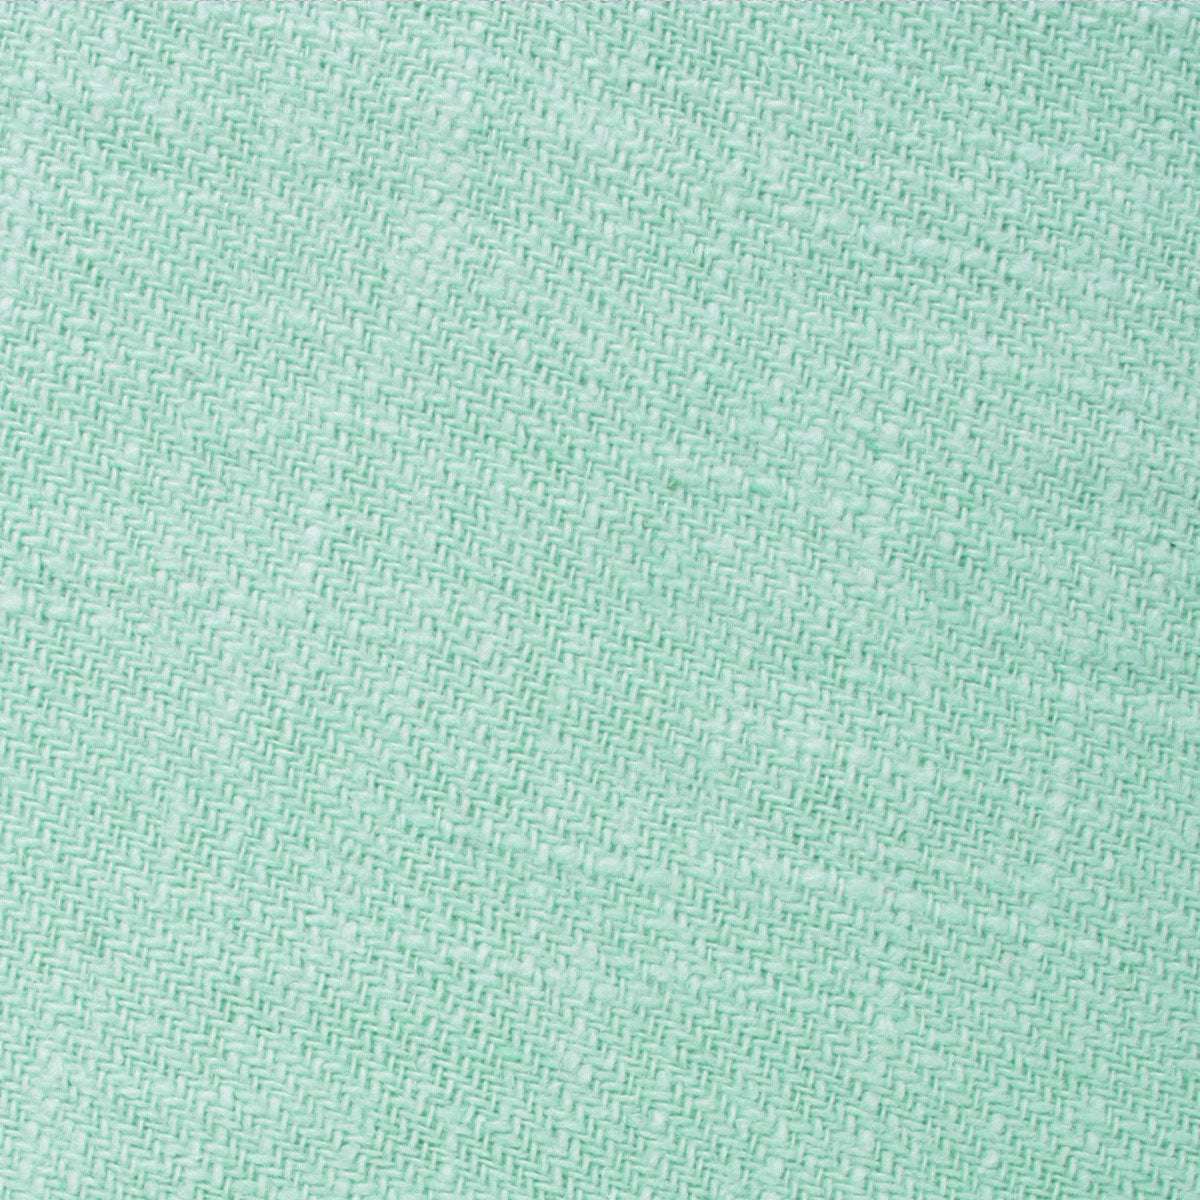 Mint Blush Green Chevron Linen Pocket Square Fabric